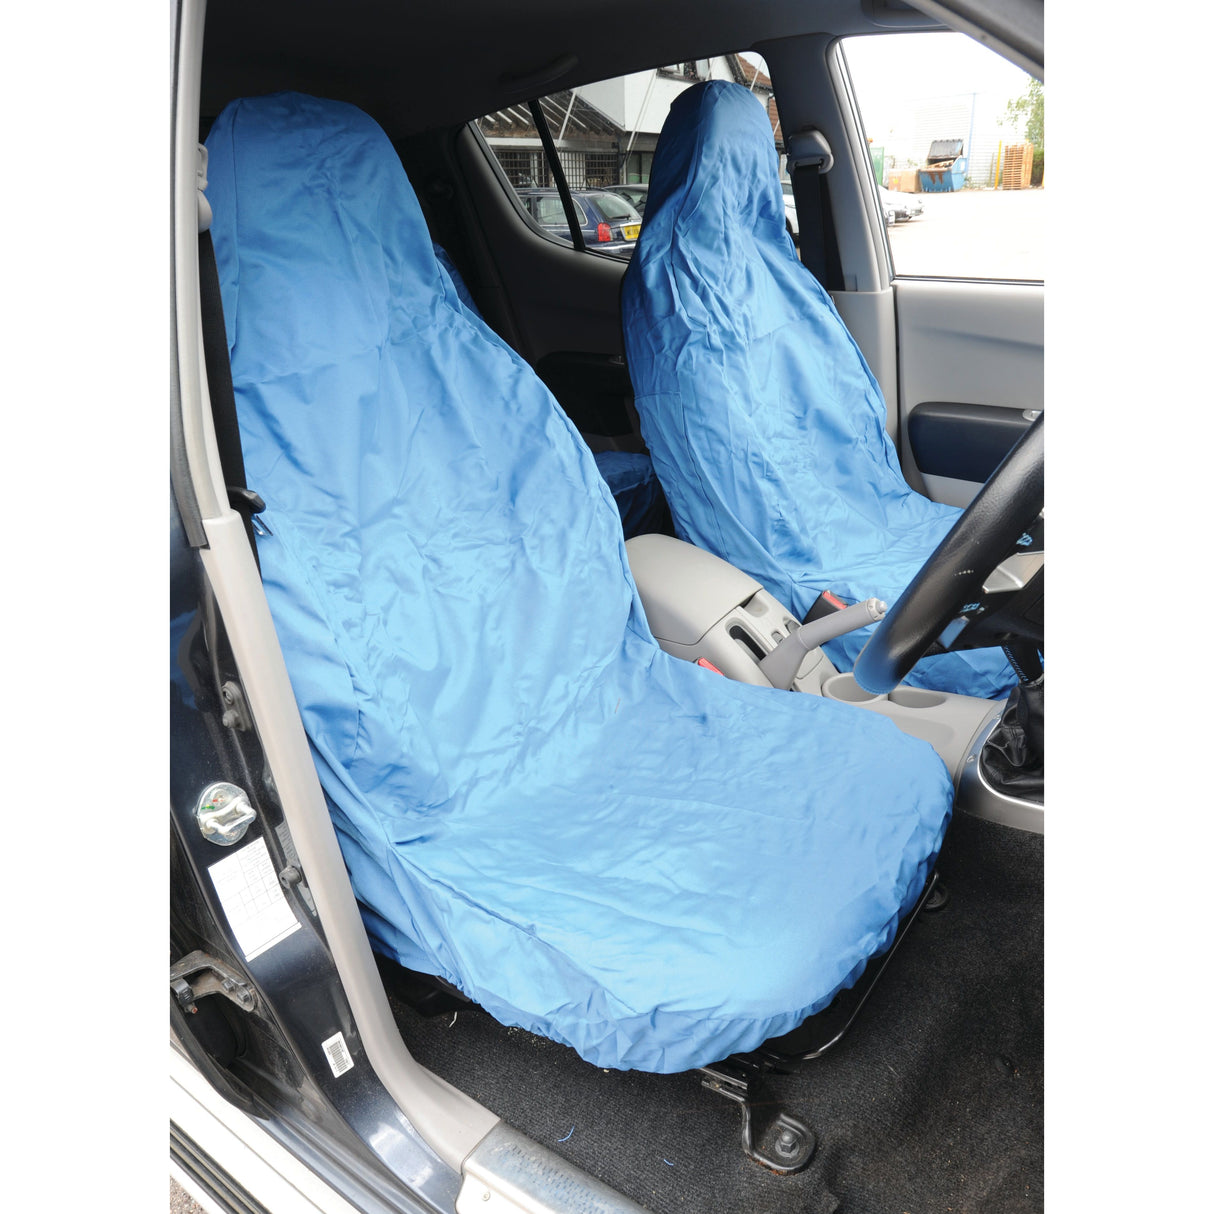 Front Large Seat Cover - Car & Van - Universal Fit
 - S.71859 - Farming Parts